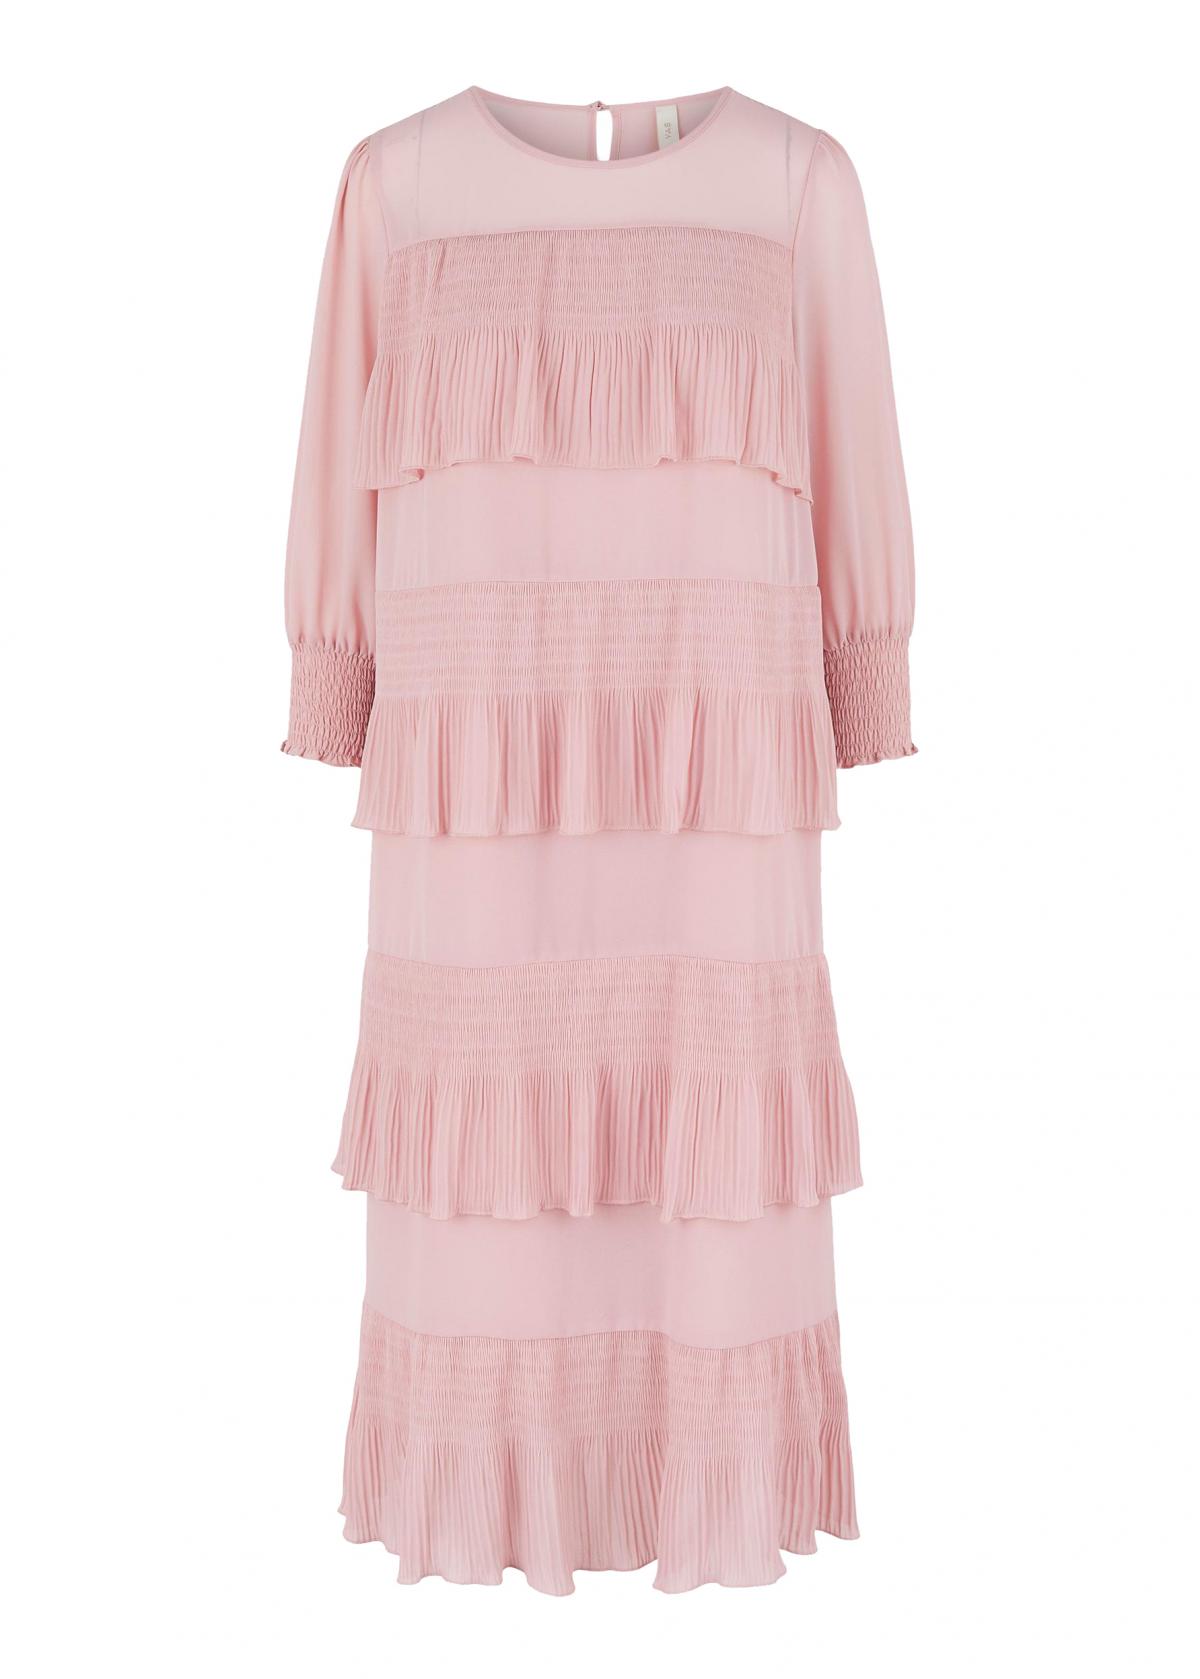 9. Roze charleston-jurk